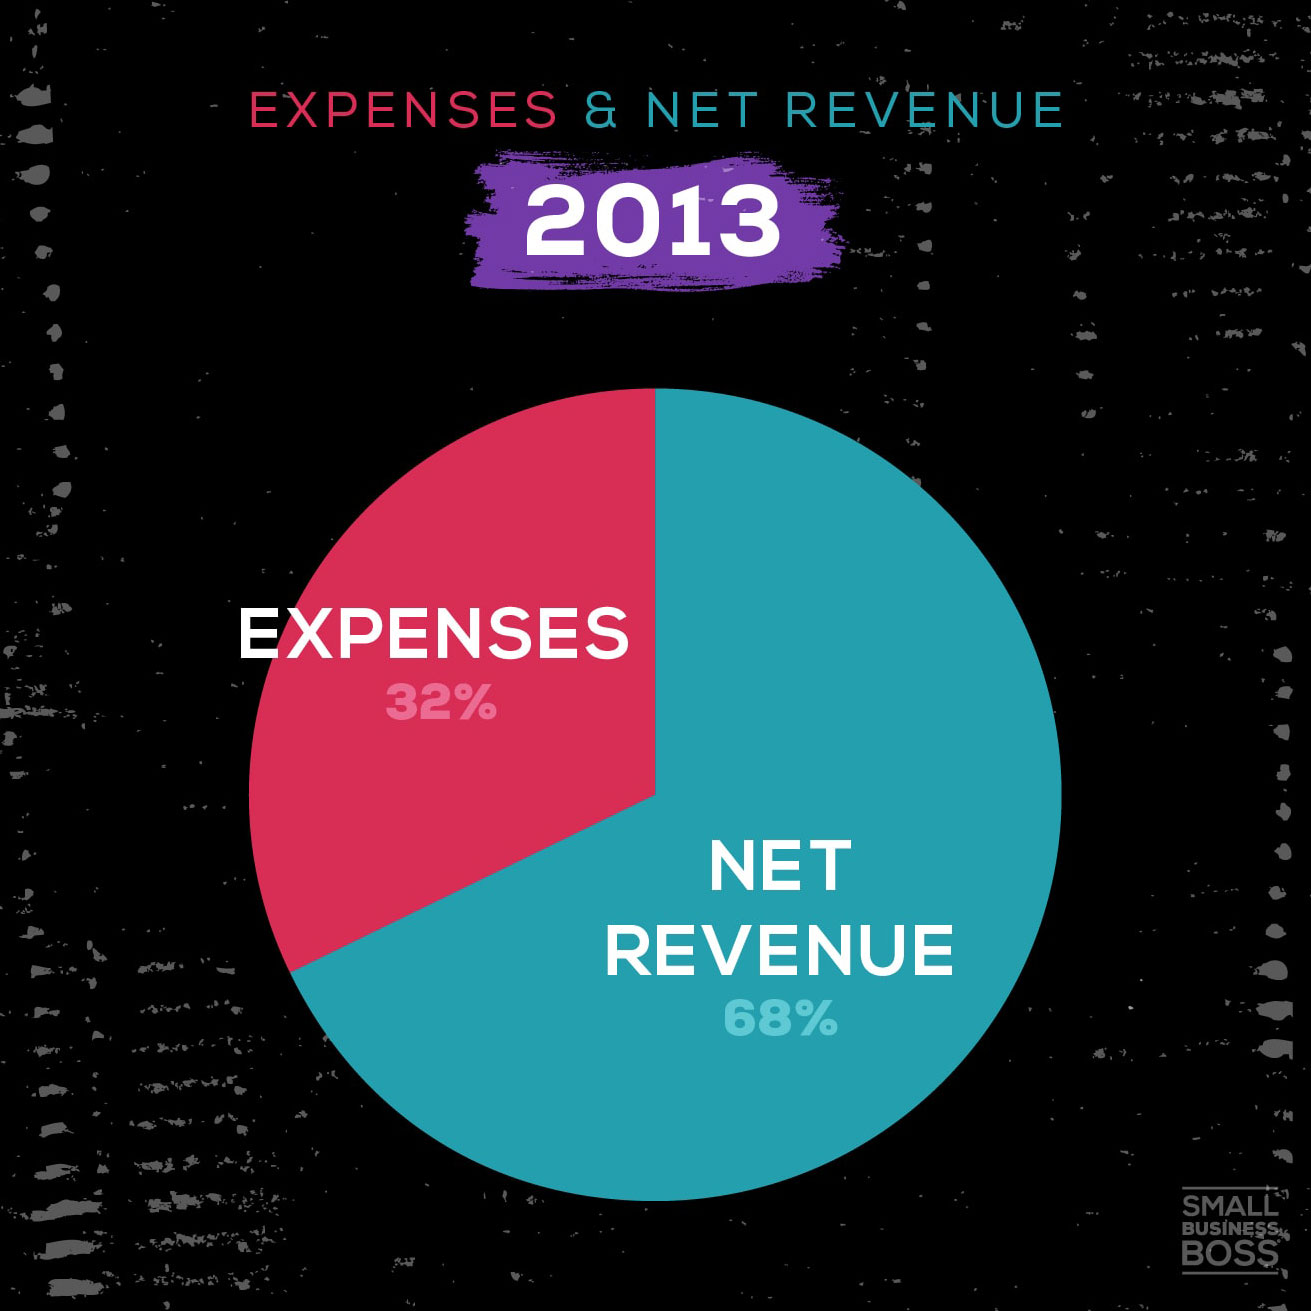 pie chart depicting expenses vs revenue in 2013